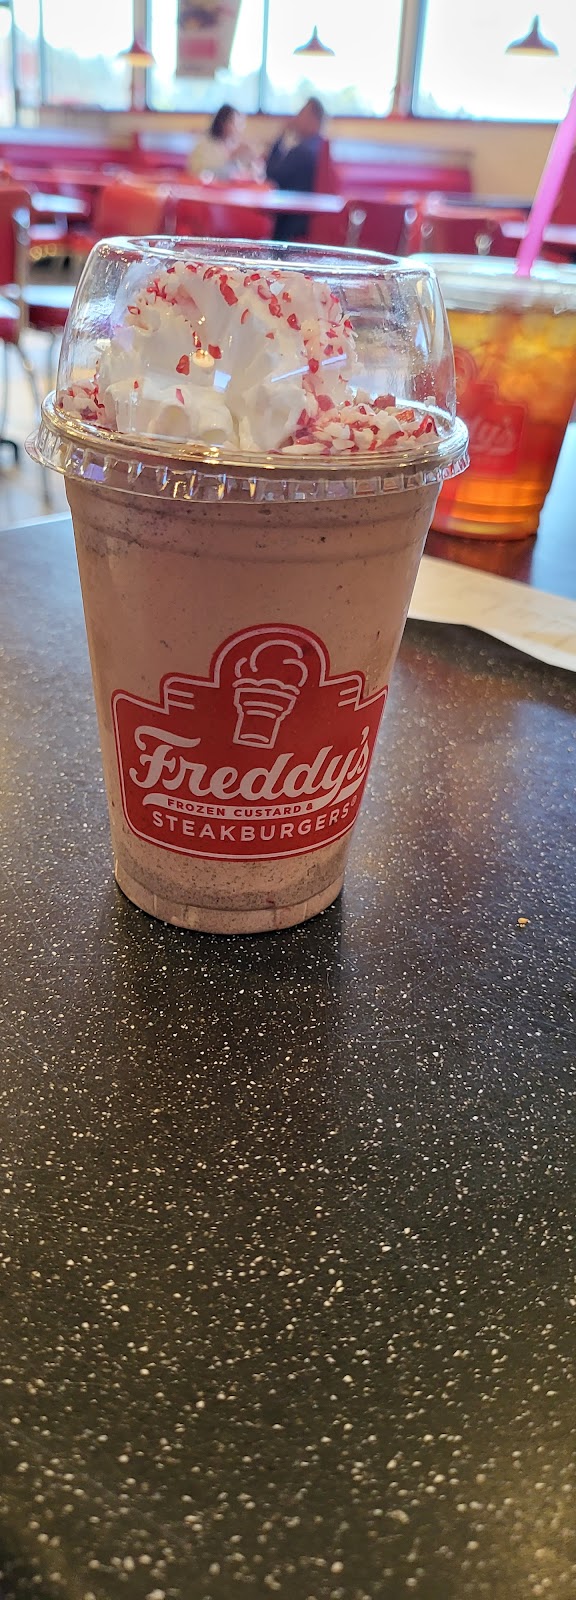 Freddys Frozen Custard & Steakburgers | 120 E Main St, Cartersville, GA 30121, USA | Phone: (770) 334-8676